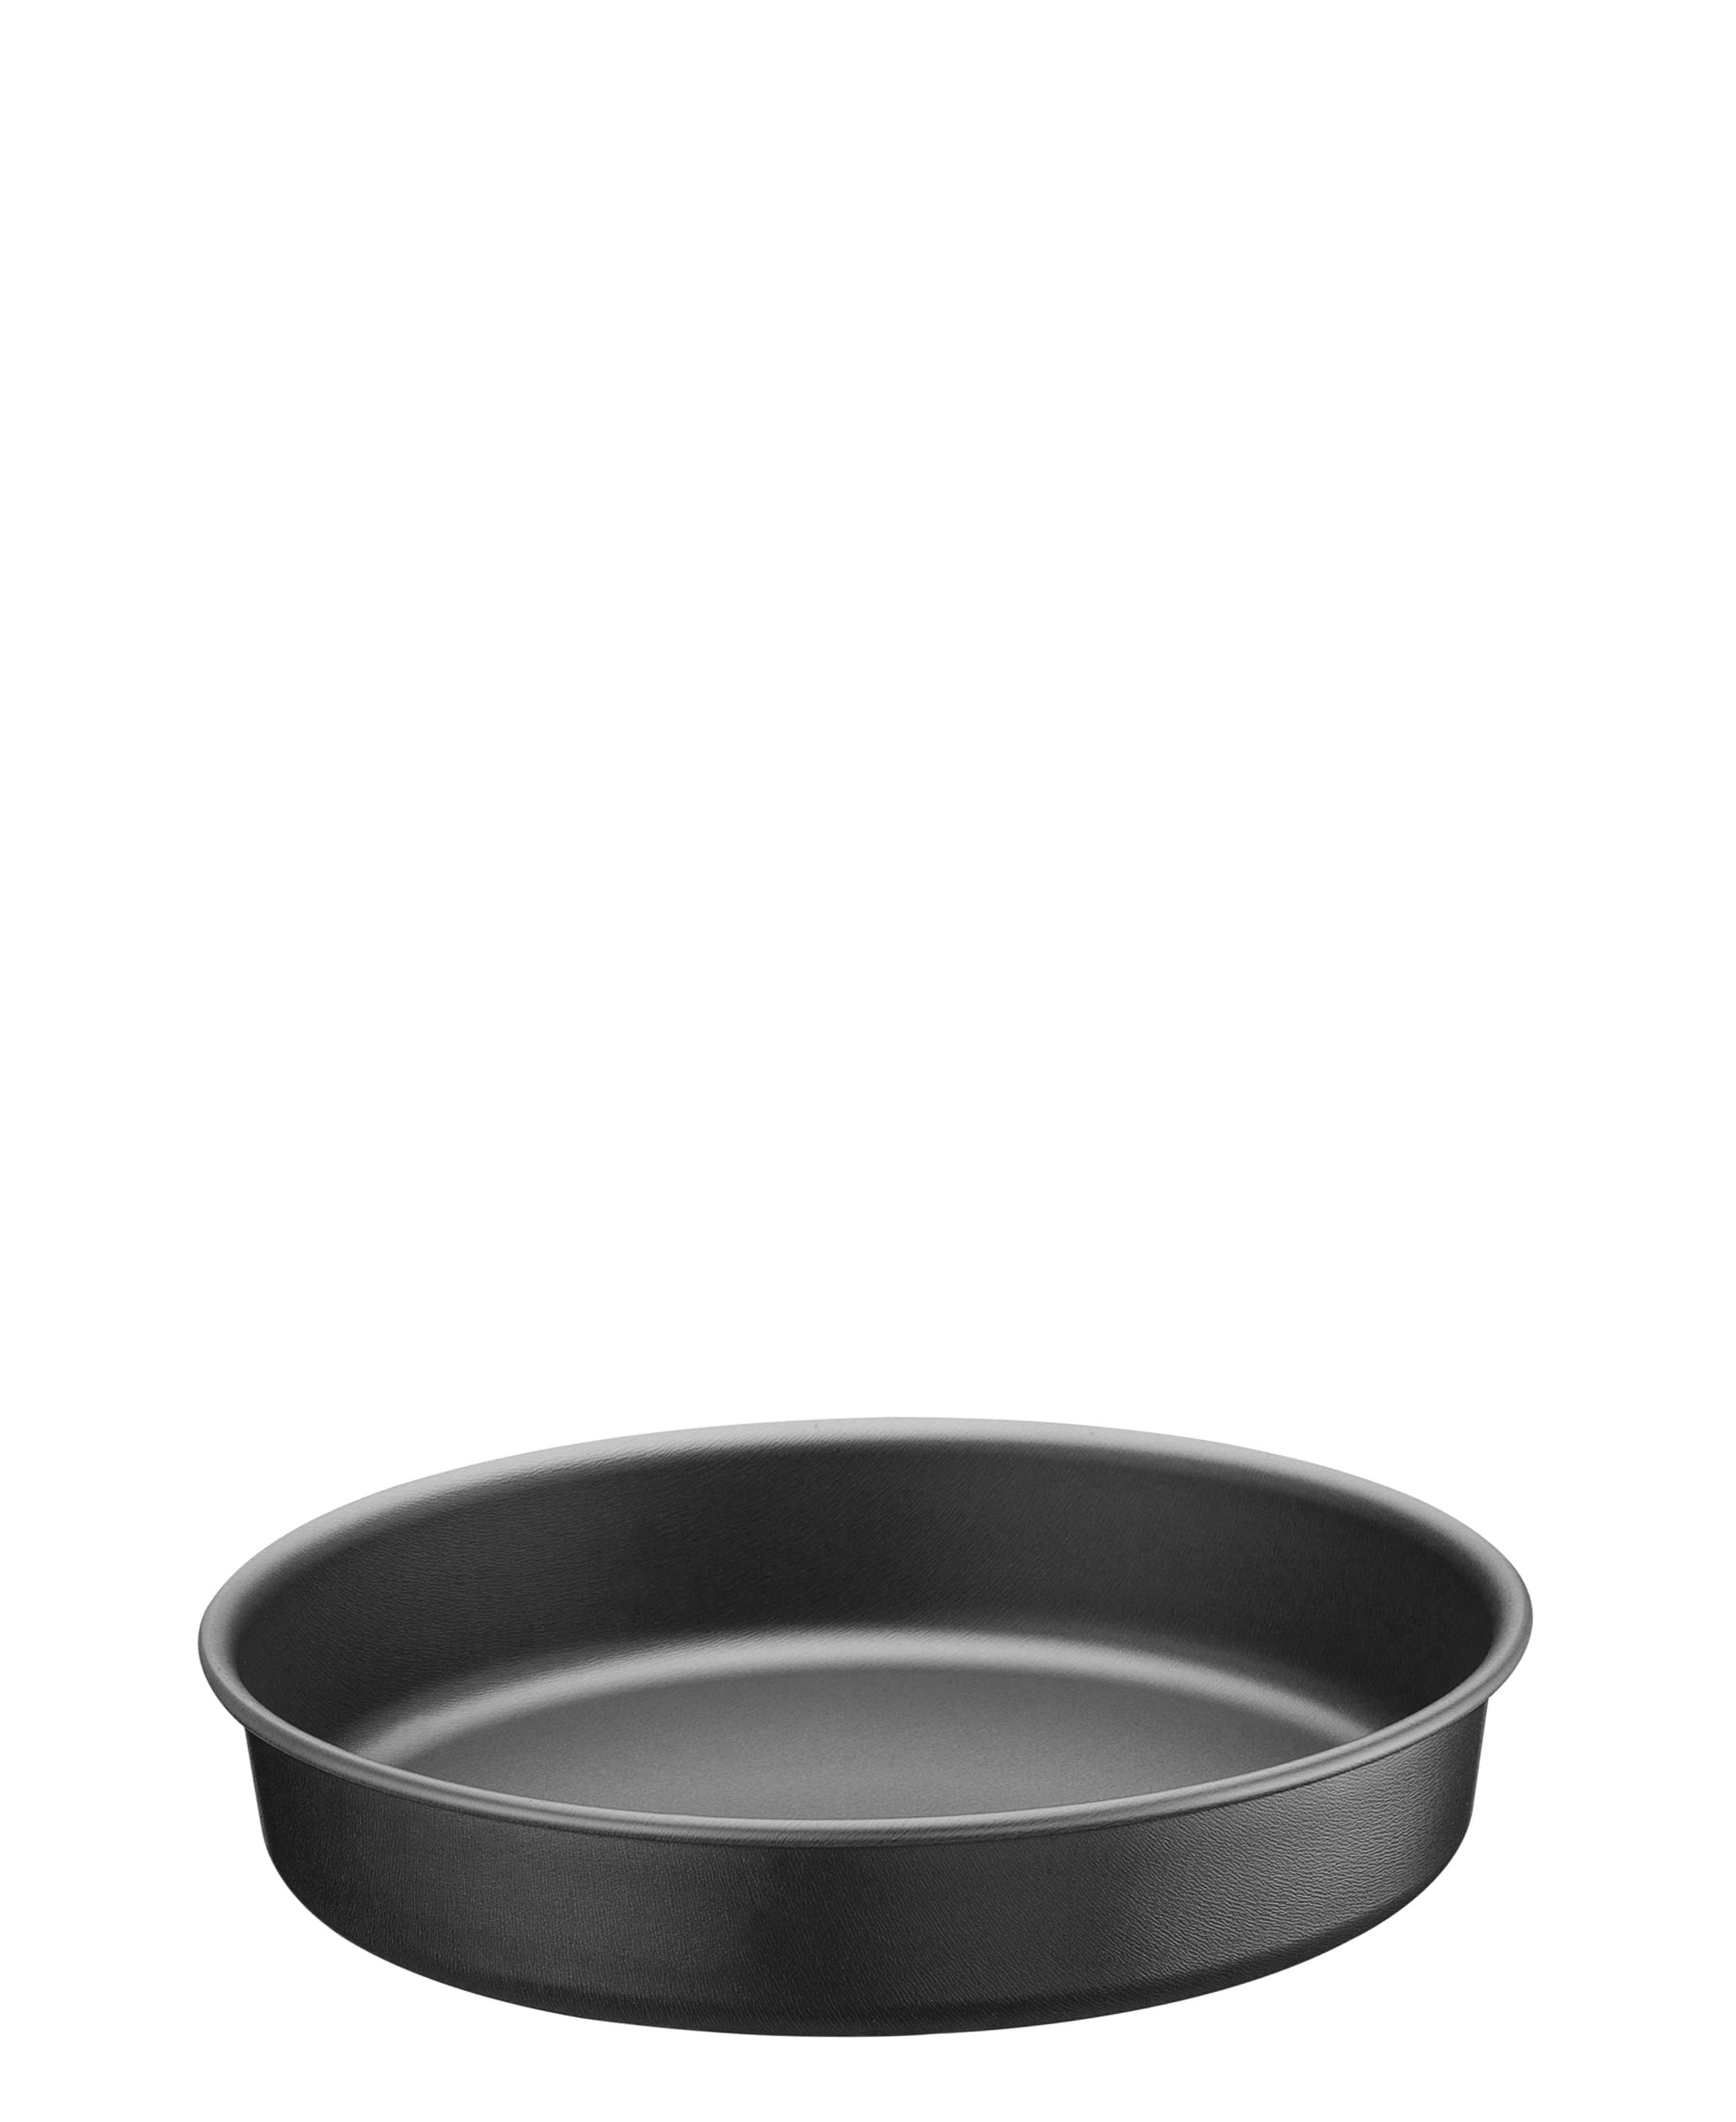 Tramontina Round Roasting Pan With Nonstick Coating 26cm - Grey